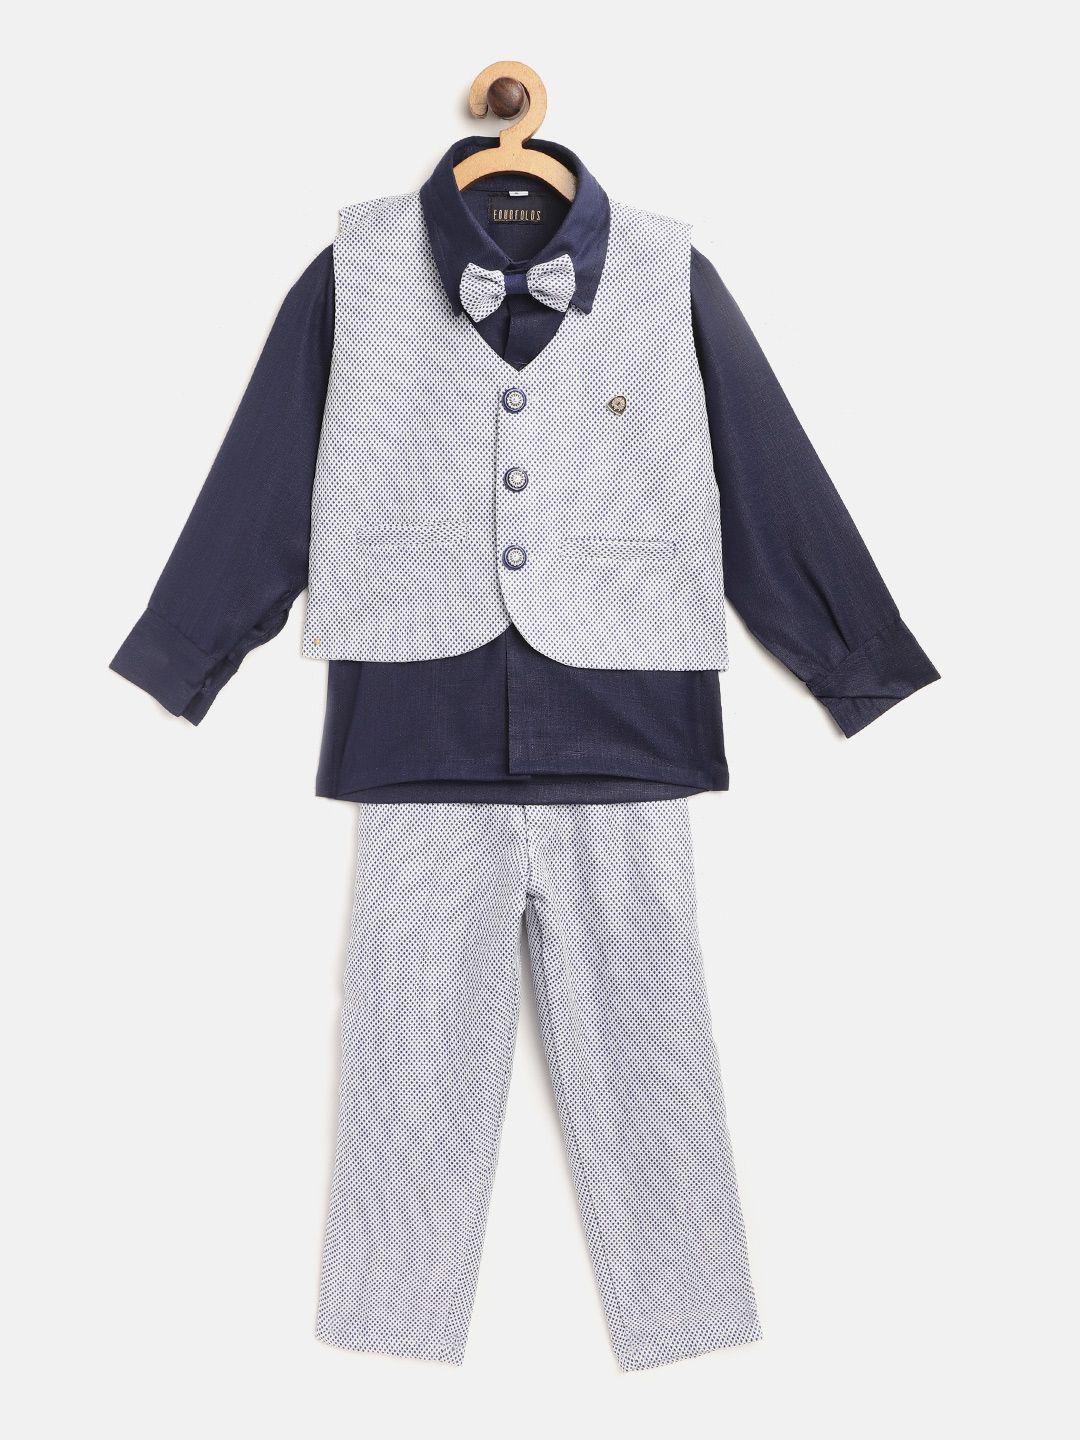 fourfolds-boys-navy-blue-&-white-self-design-clothing-set-with-bow-tie